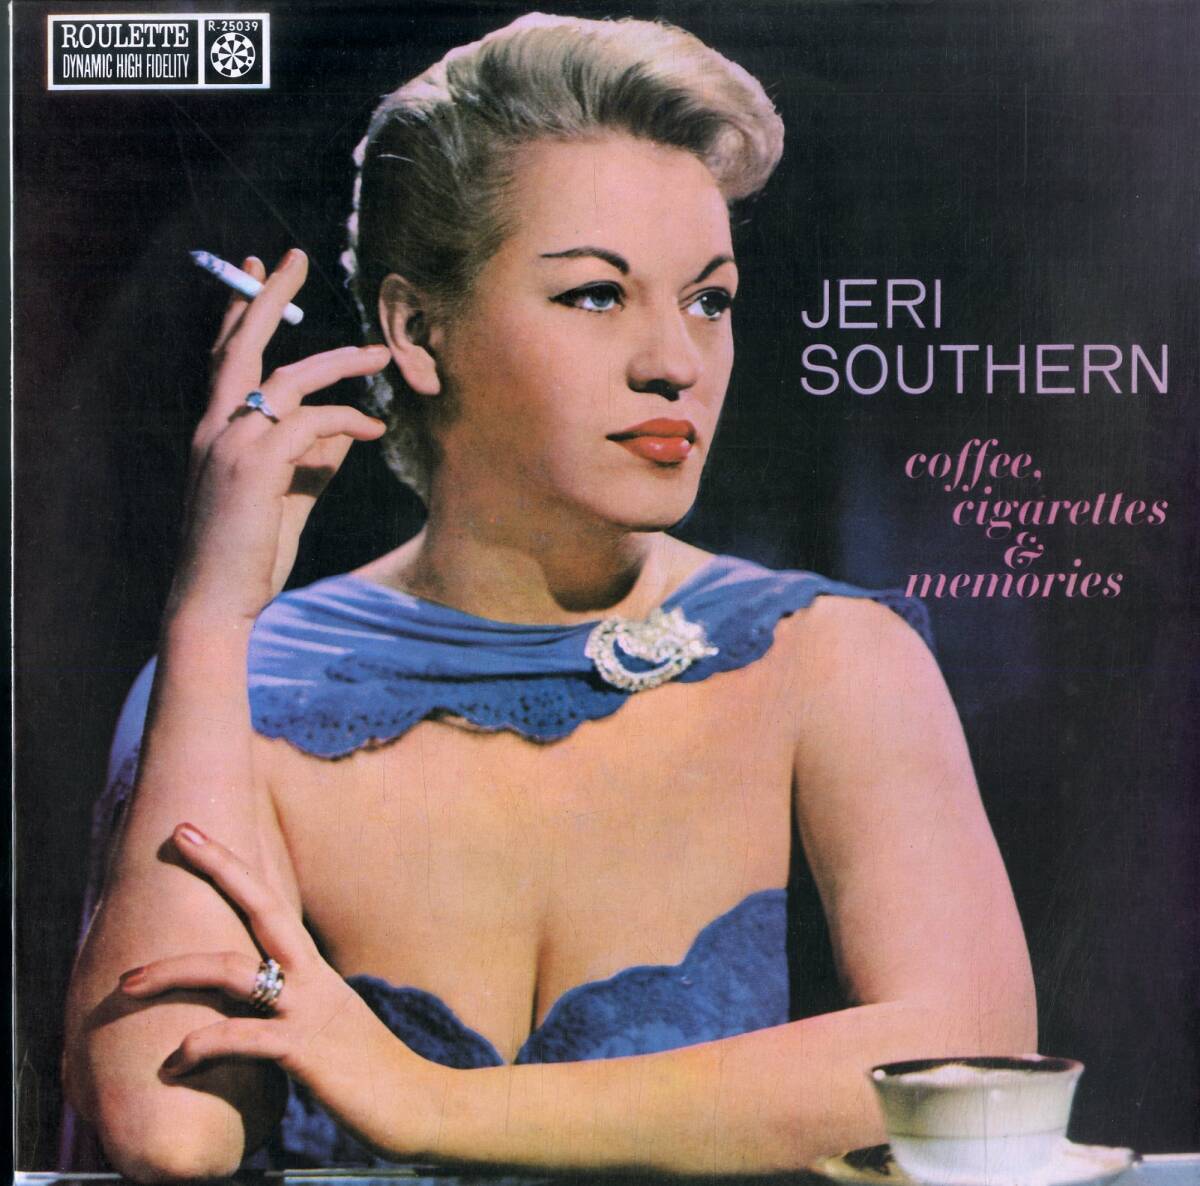 A00592227/LP/Jeri Southern「Coffee Cigarettes & Memories」の画像1